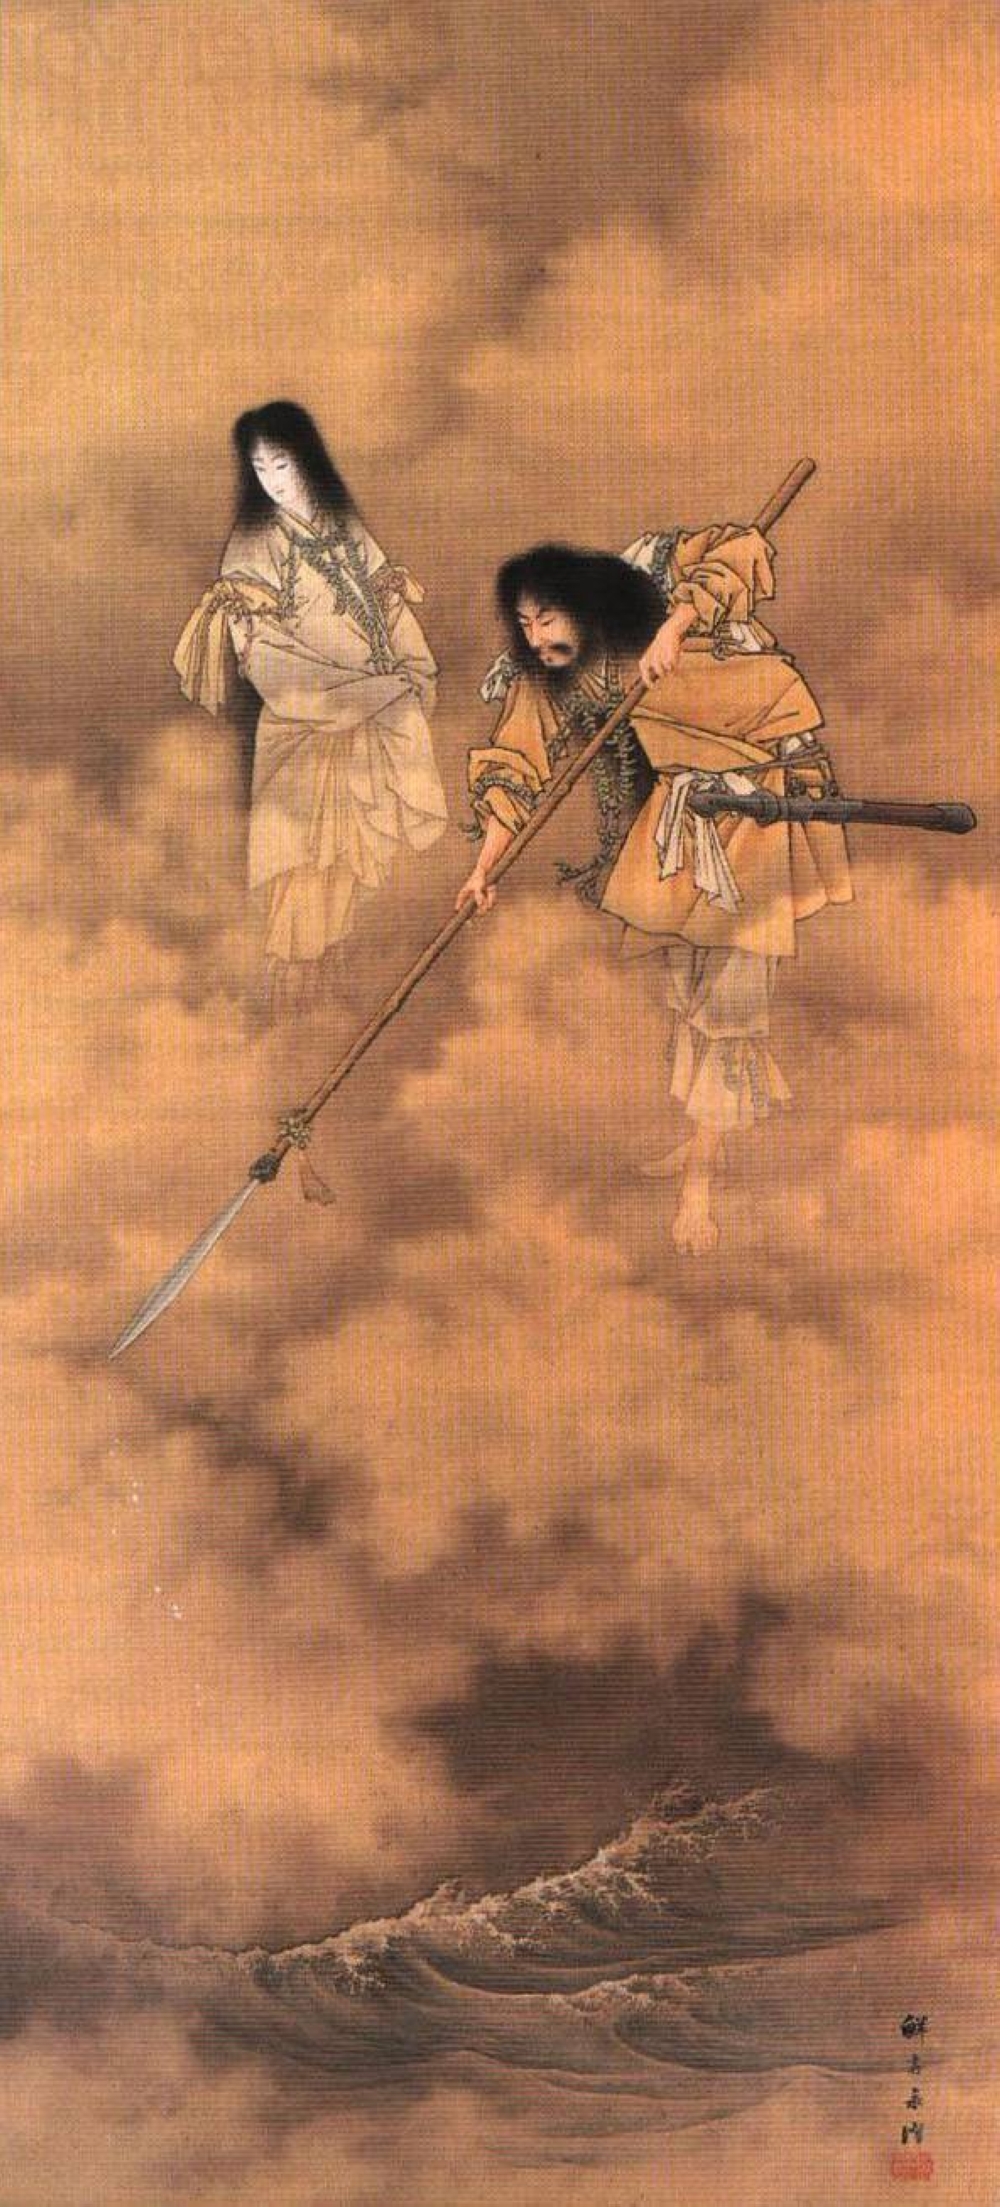 “Izanagi and Izanami,” by Eitaku Kobayashi, c. 1885.